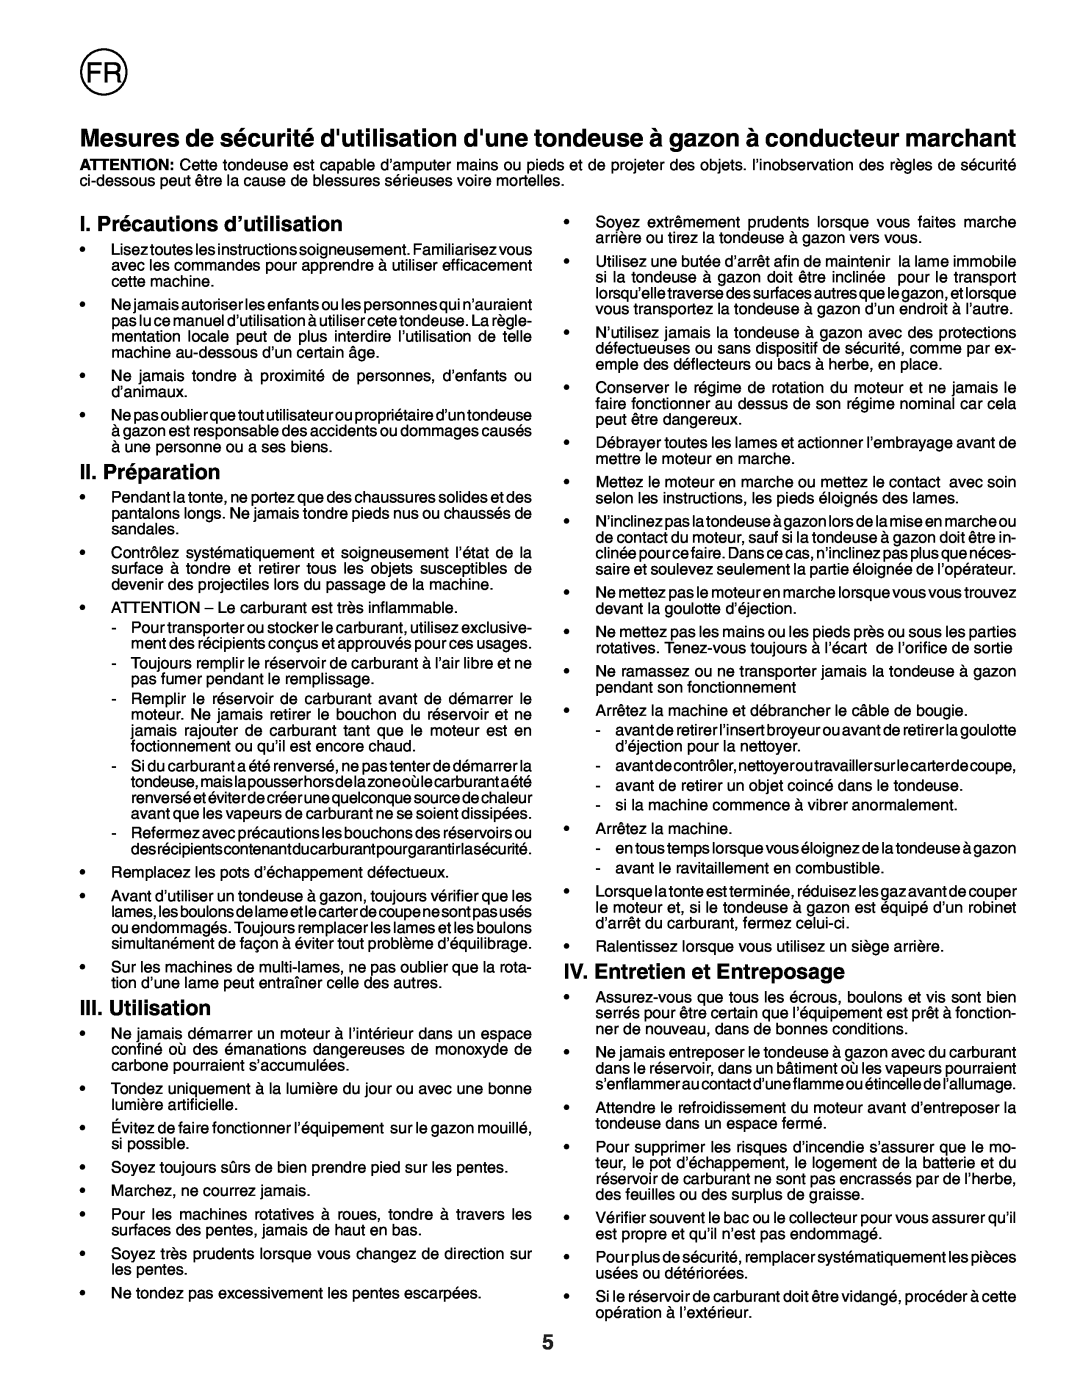 Husqvarna R152SVB I. Précautions d’utilisation, II. Préparation, III. Utilisation, IV. Entretien et Entreposage 